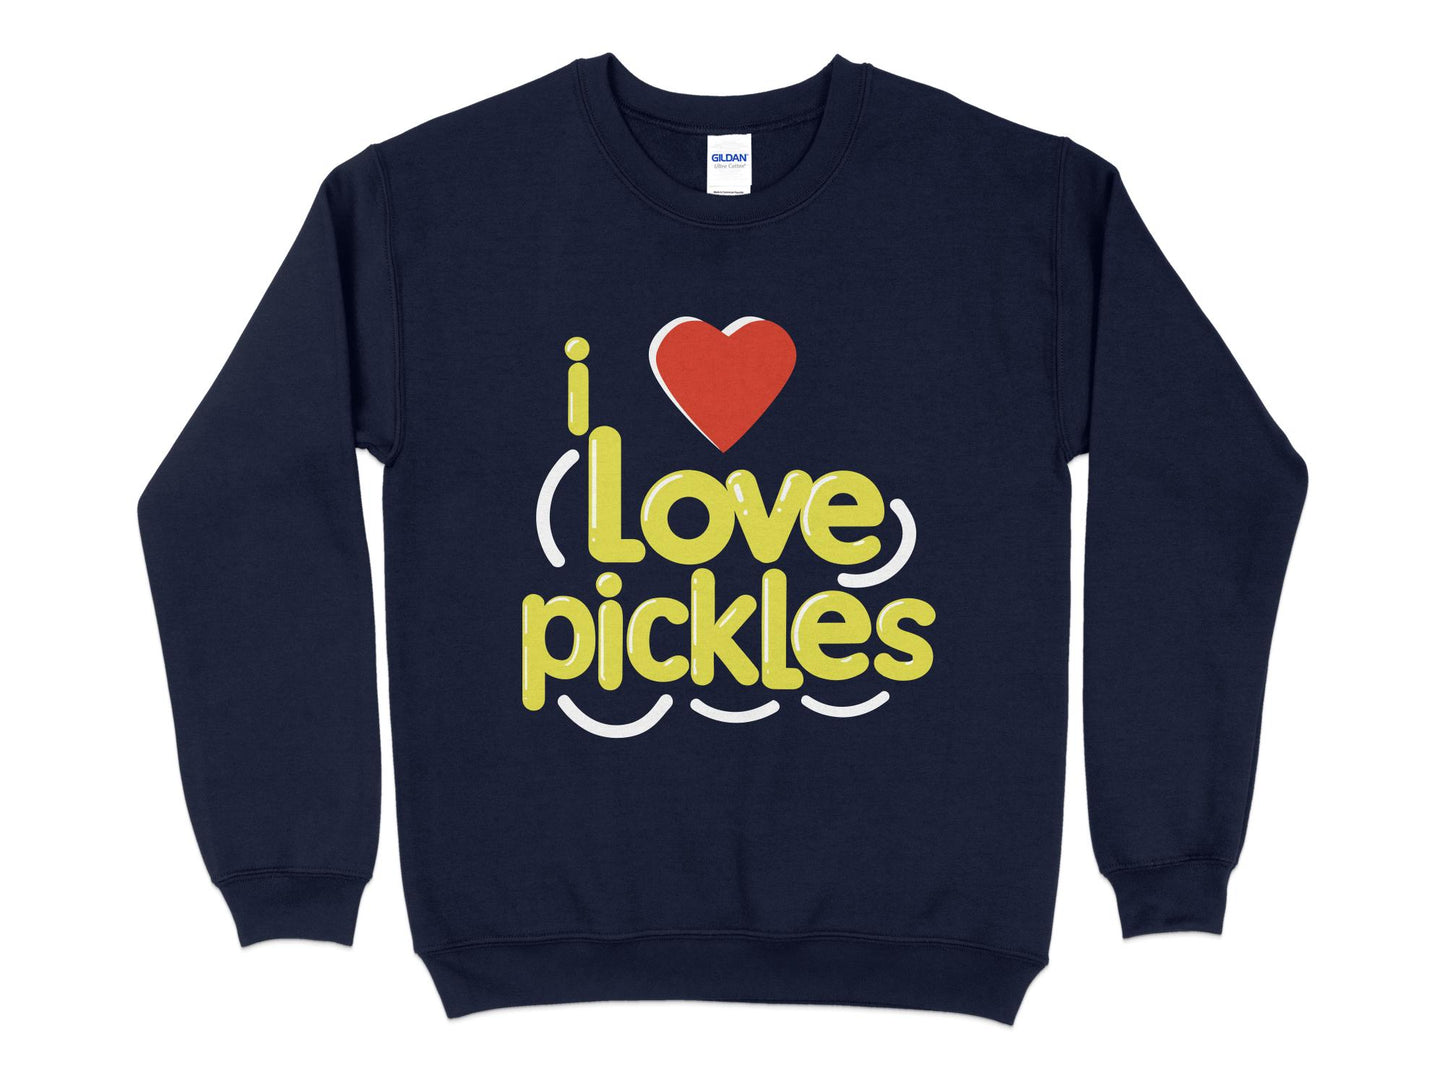 I Love Pickles Sweatshirt, navy blue